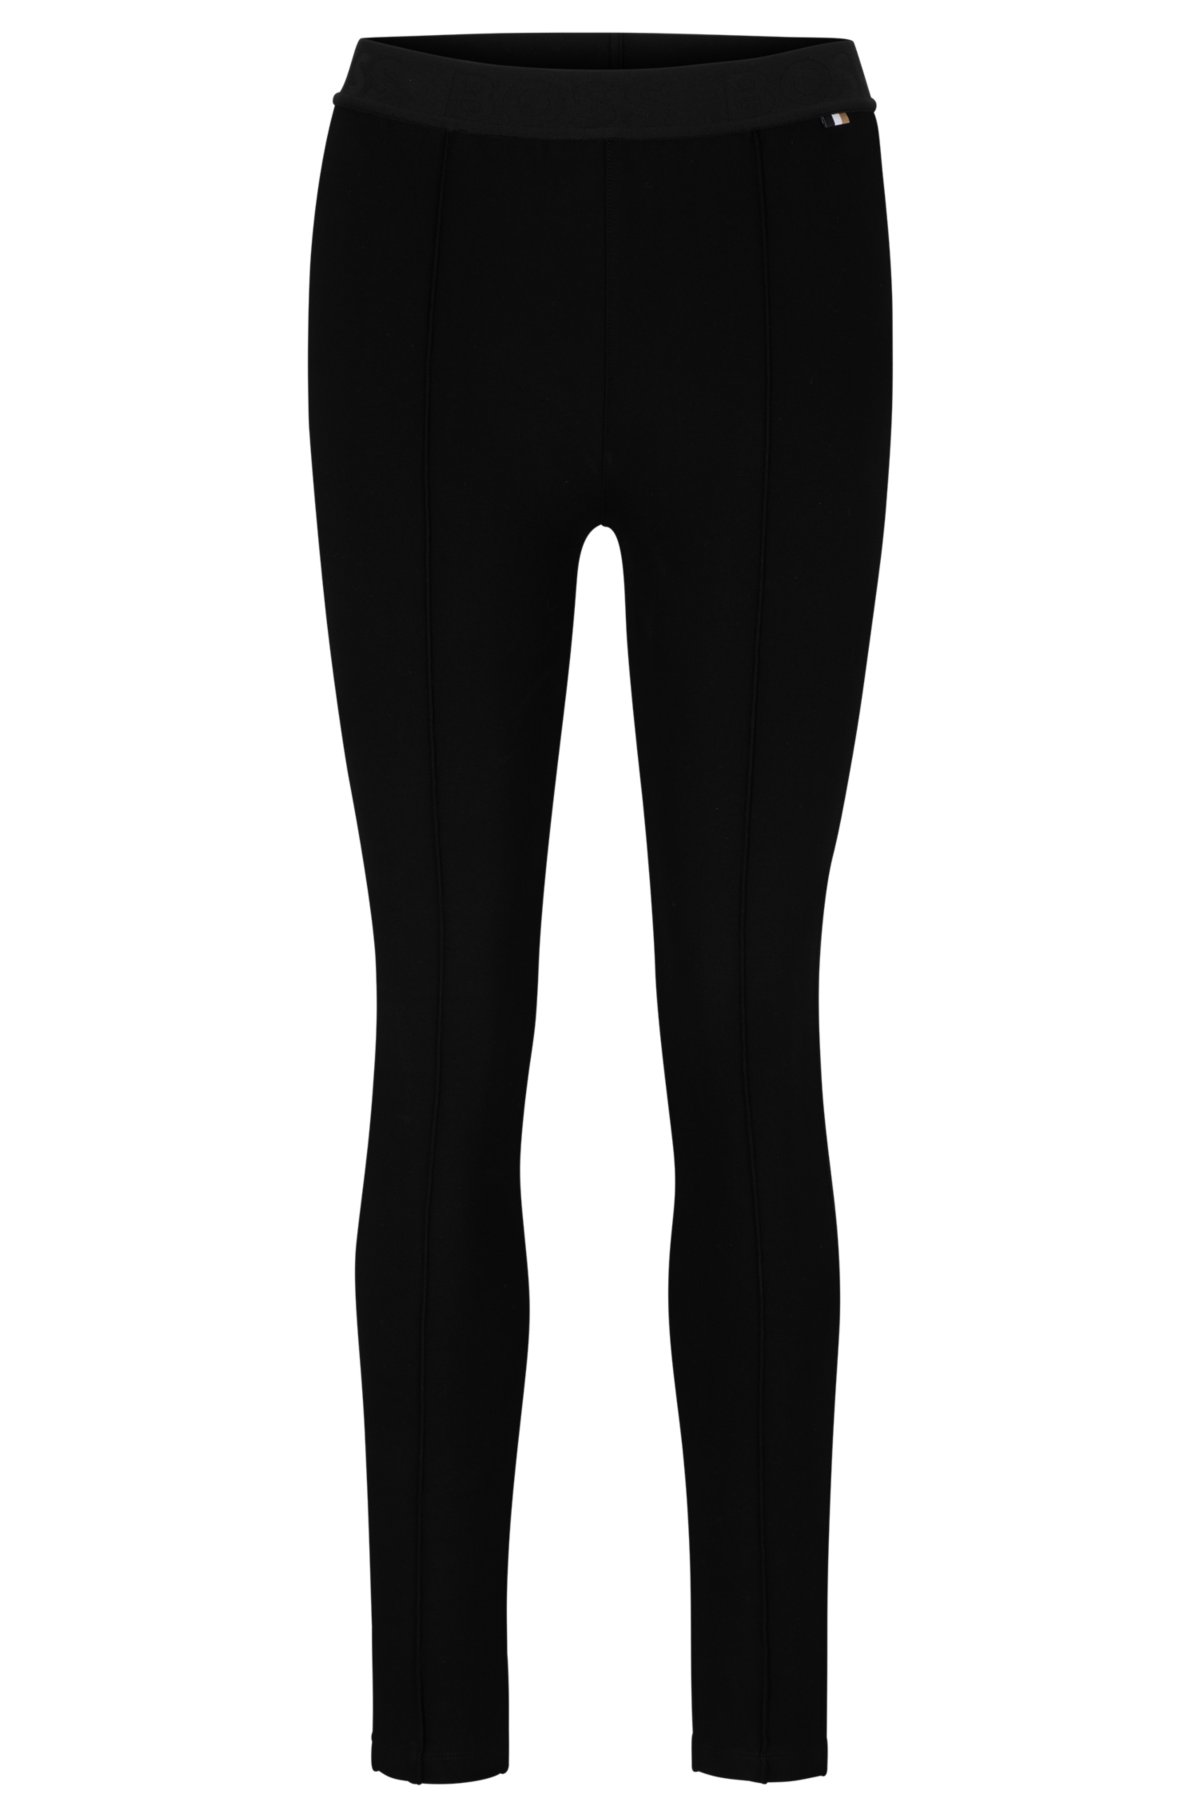 Black leatherette leggings - VIP Italian Fashion